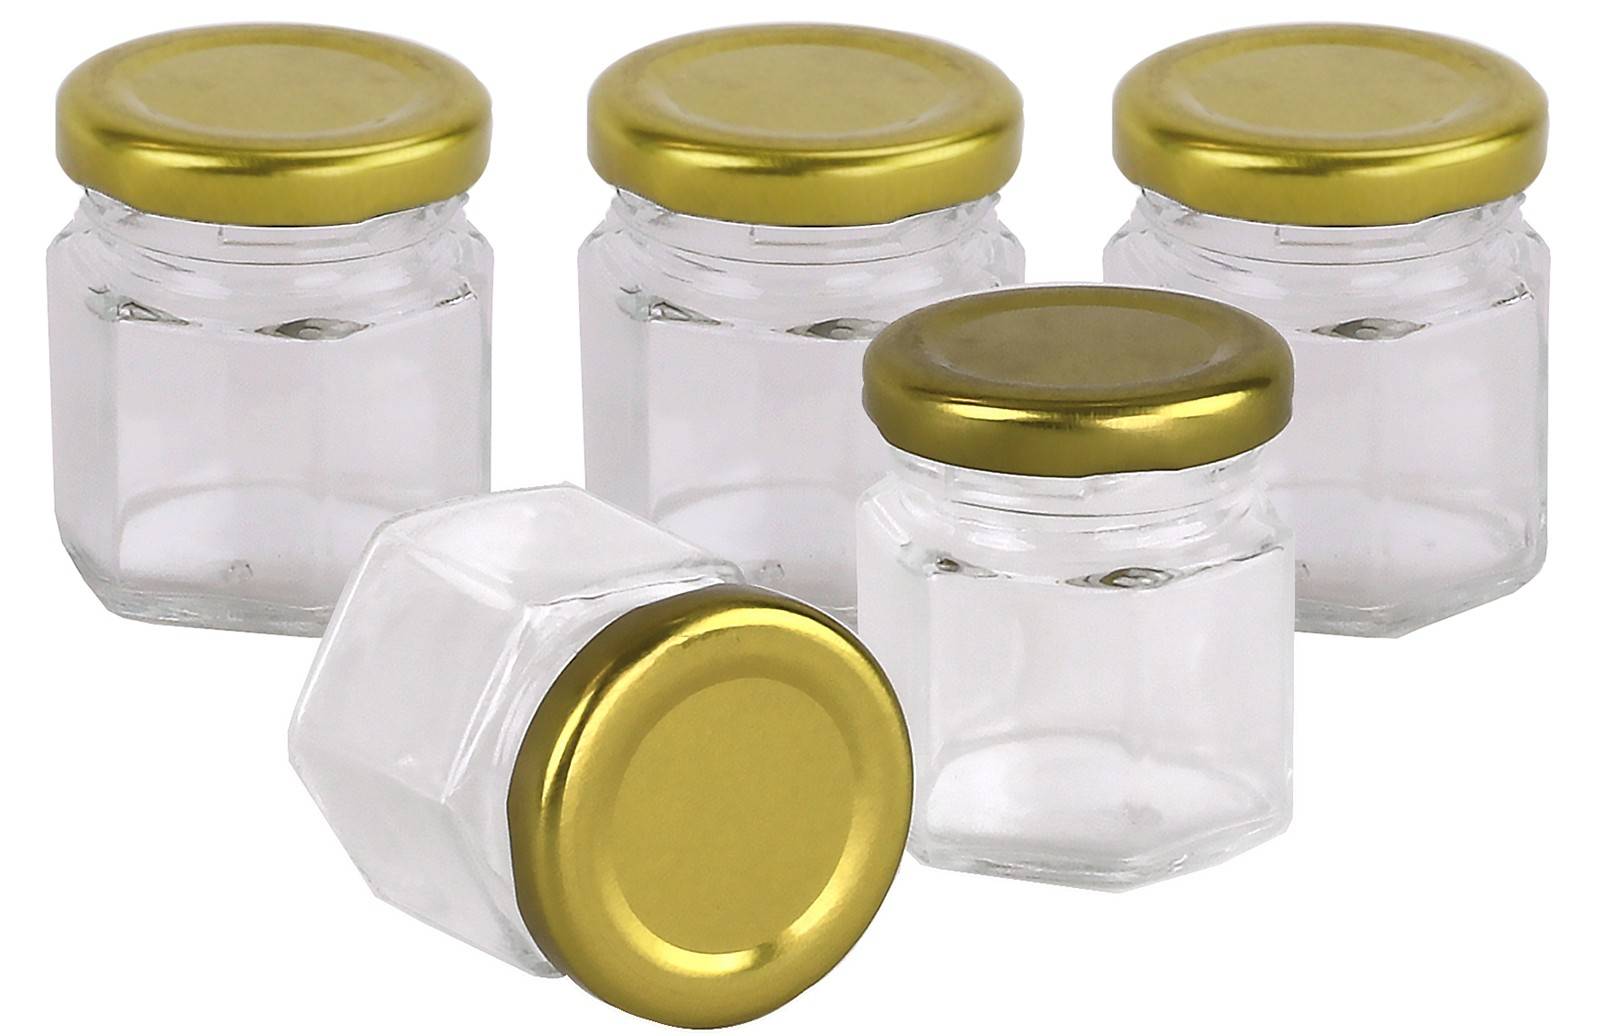 Carton 120 pcs Honey Jars - 60gm size - Glass Hexagonal with Gold Lid